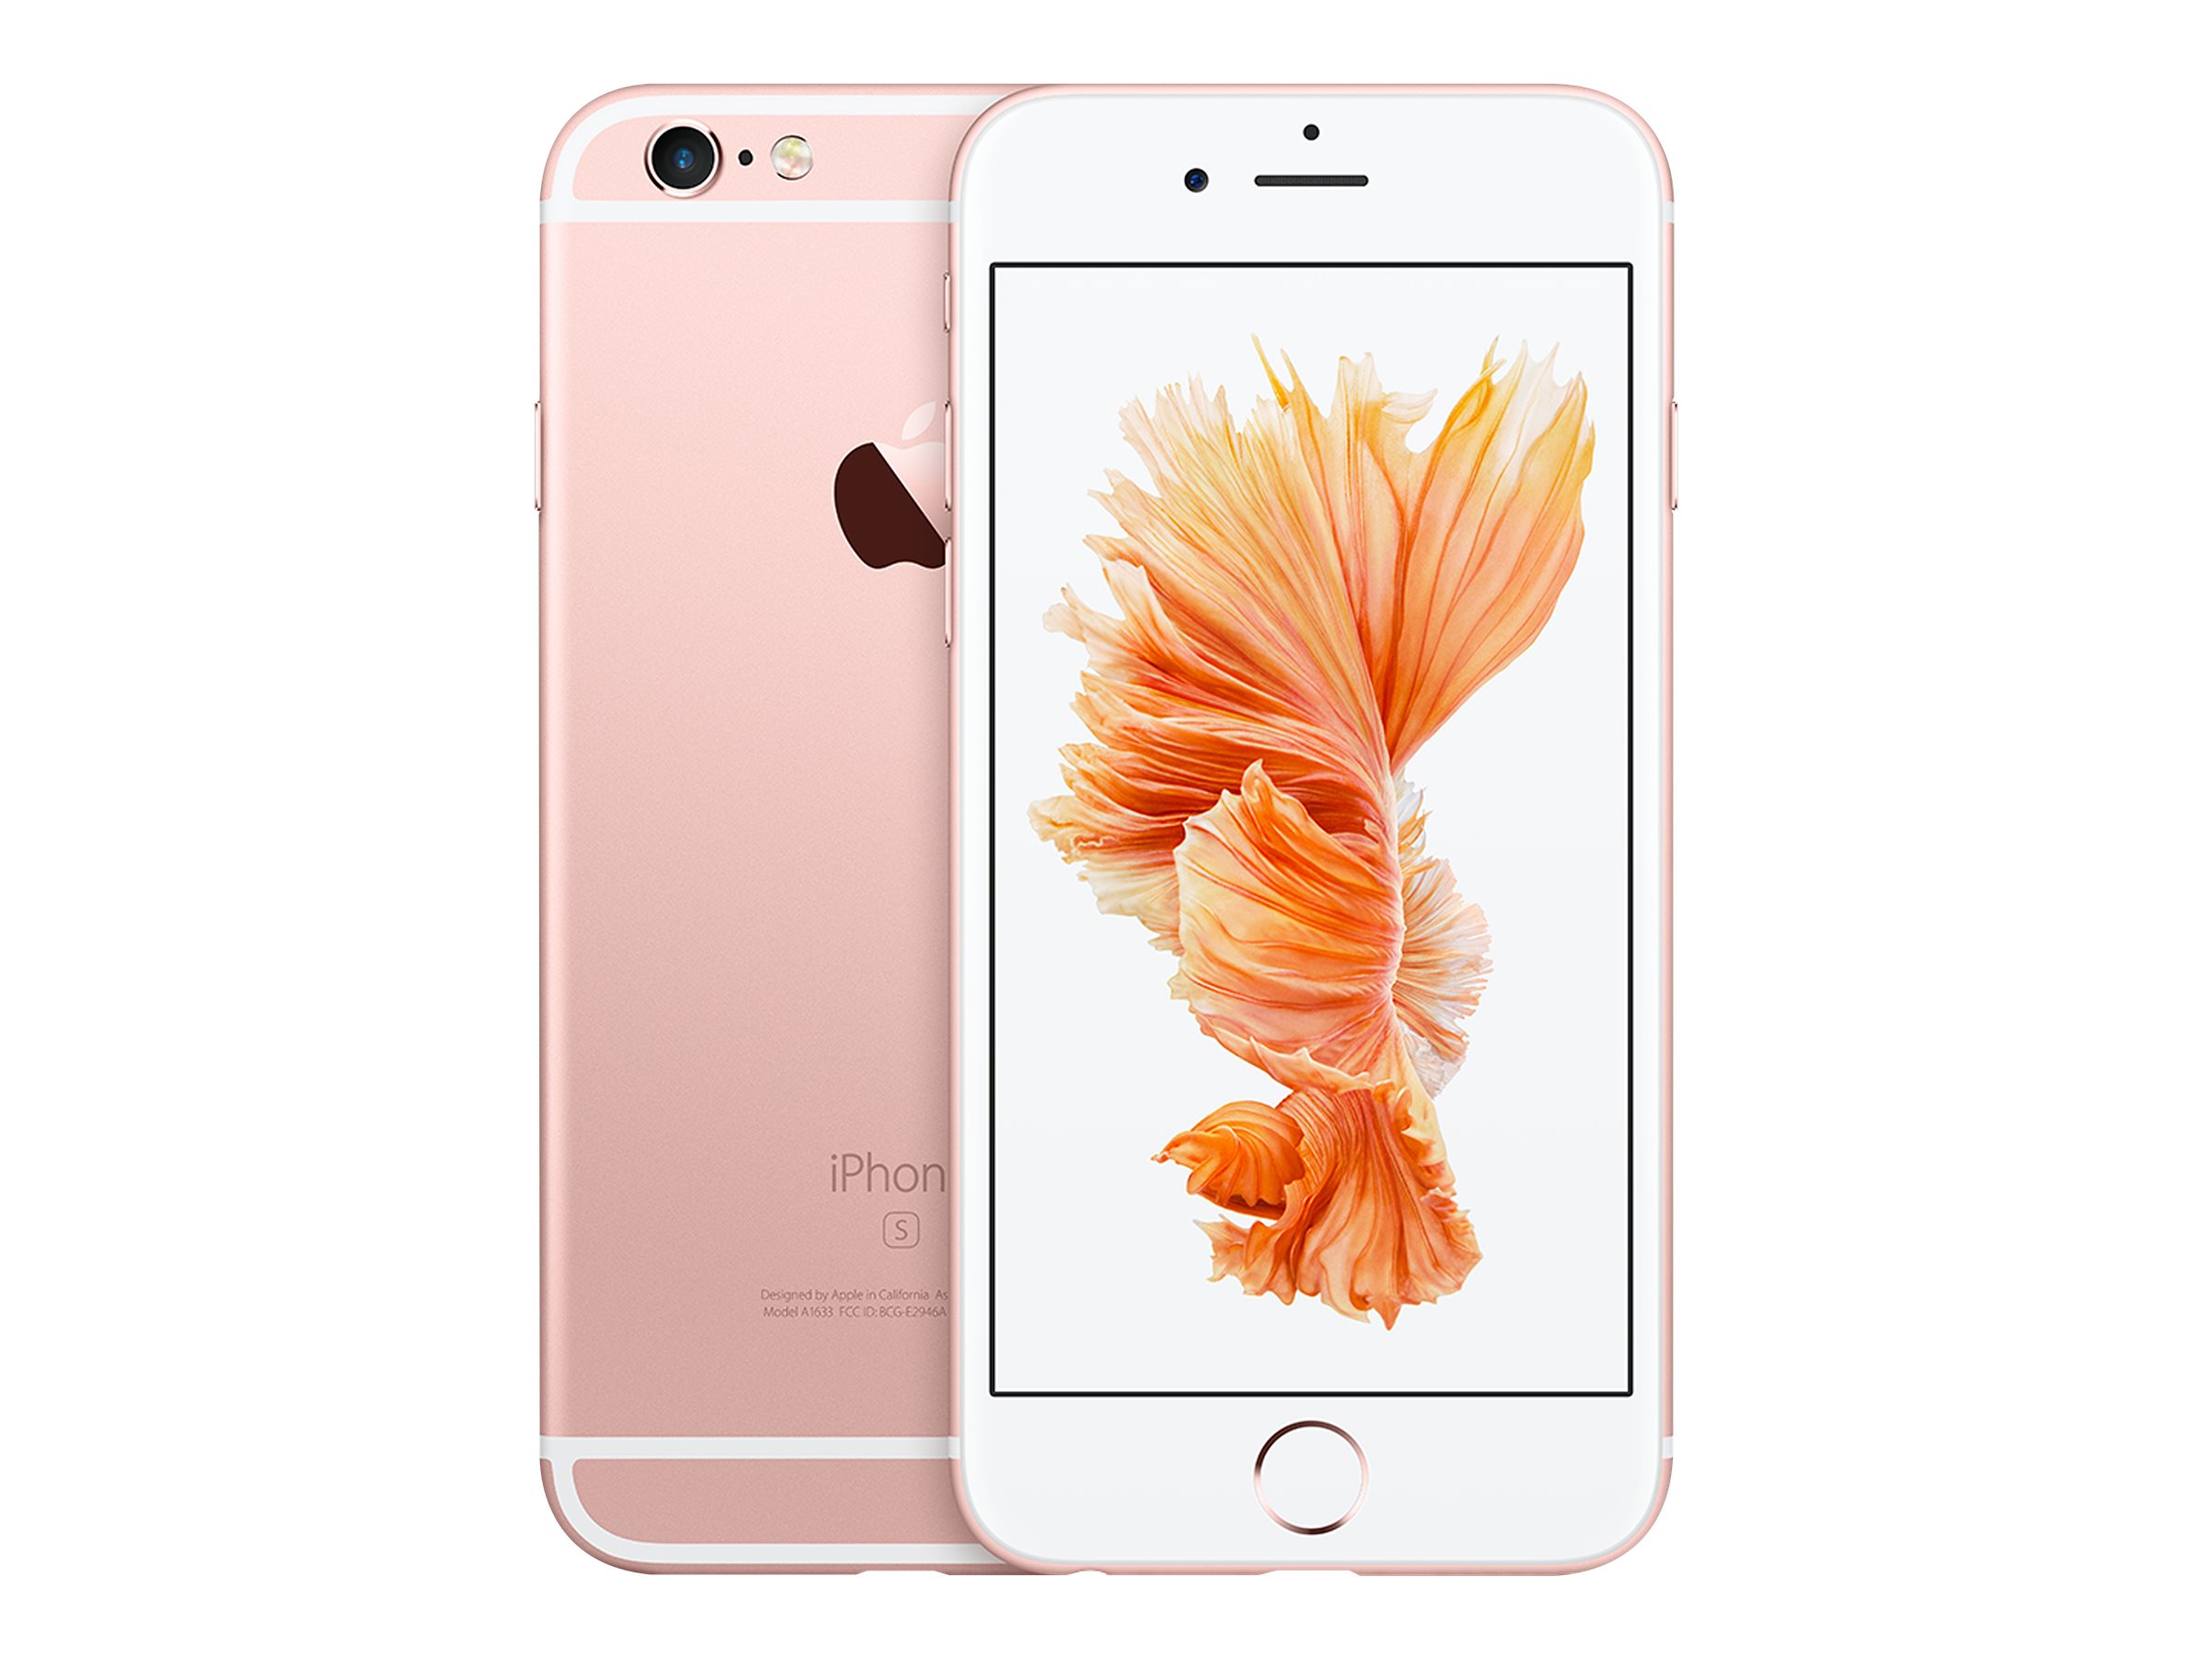 Restored Apple iPhone 6s 128GB, Rose Gold - Unlocked GSM (Refurbished) - image 2 of 3